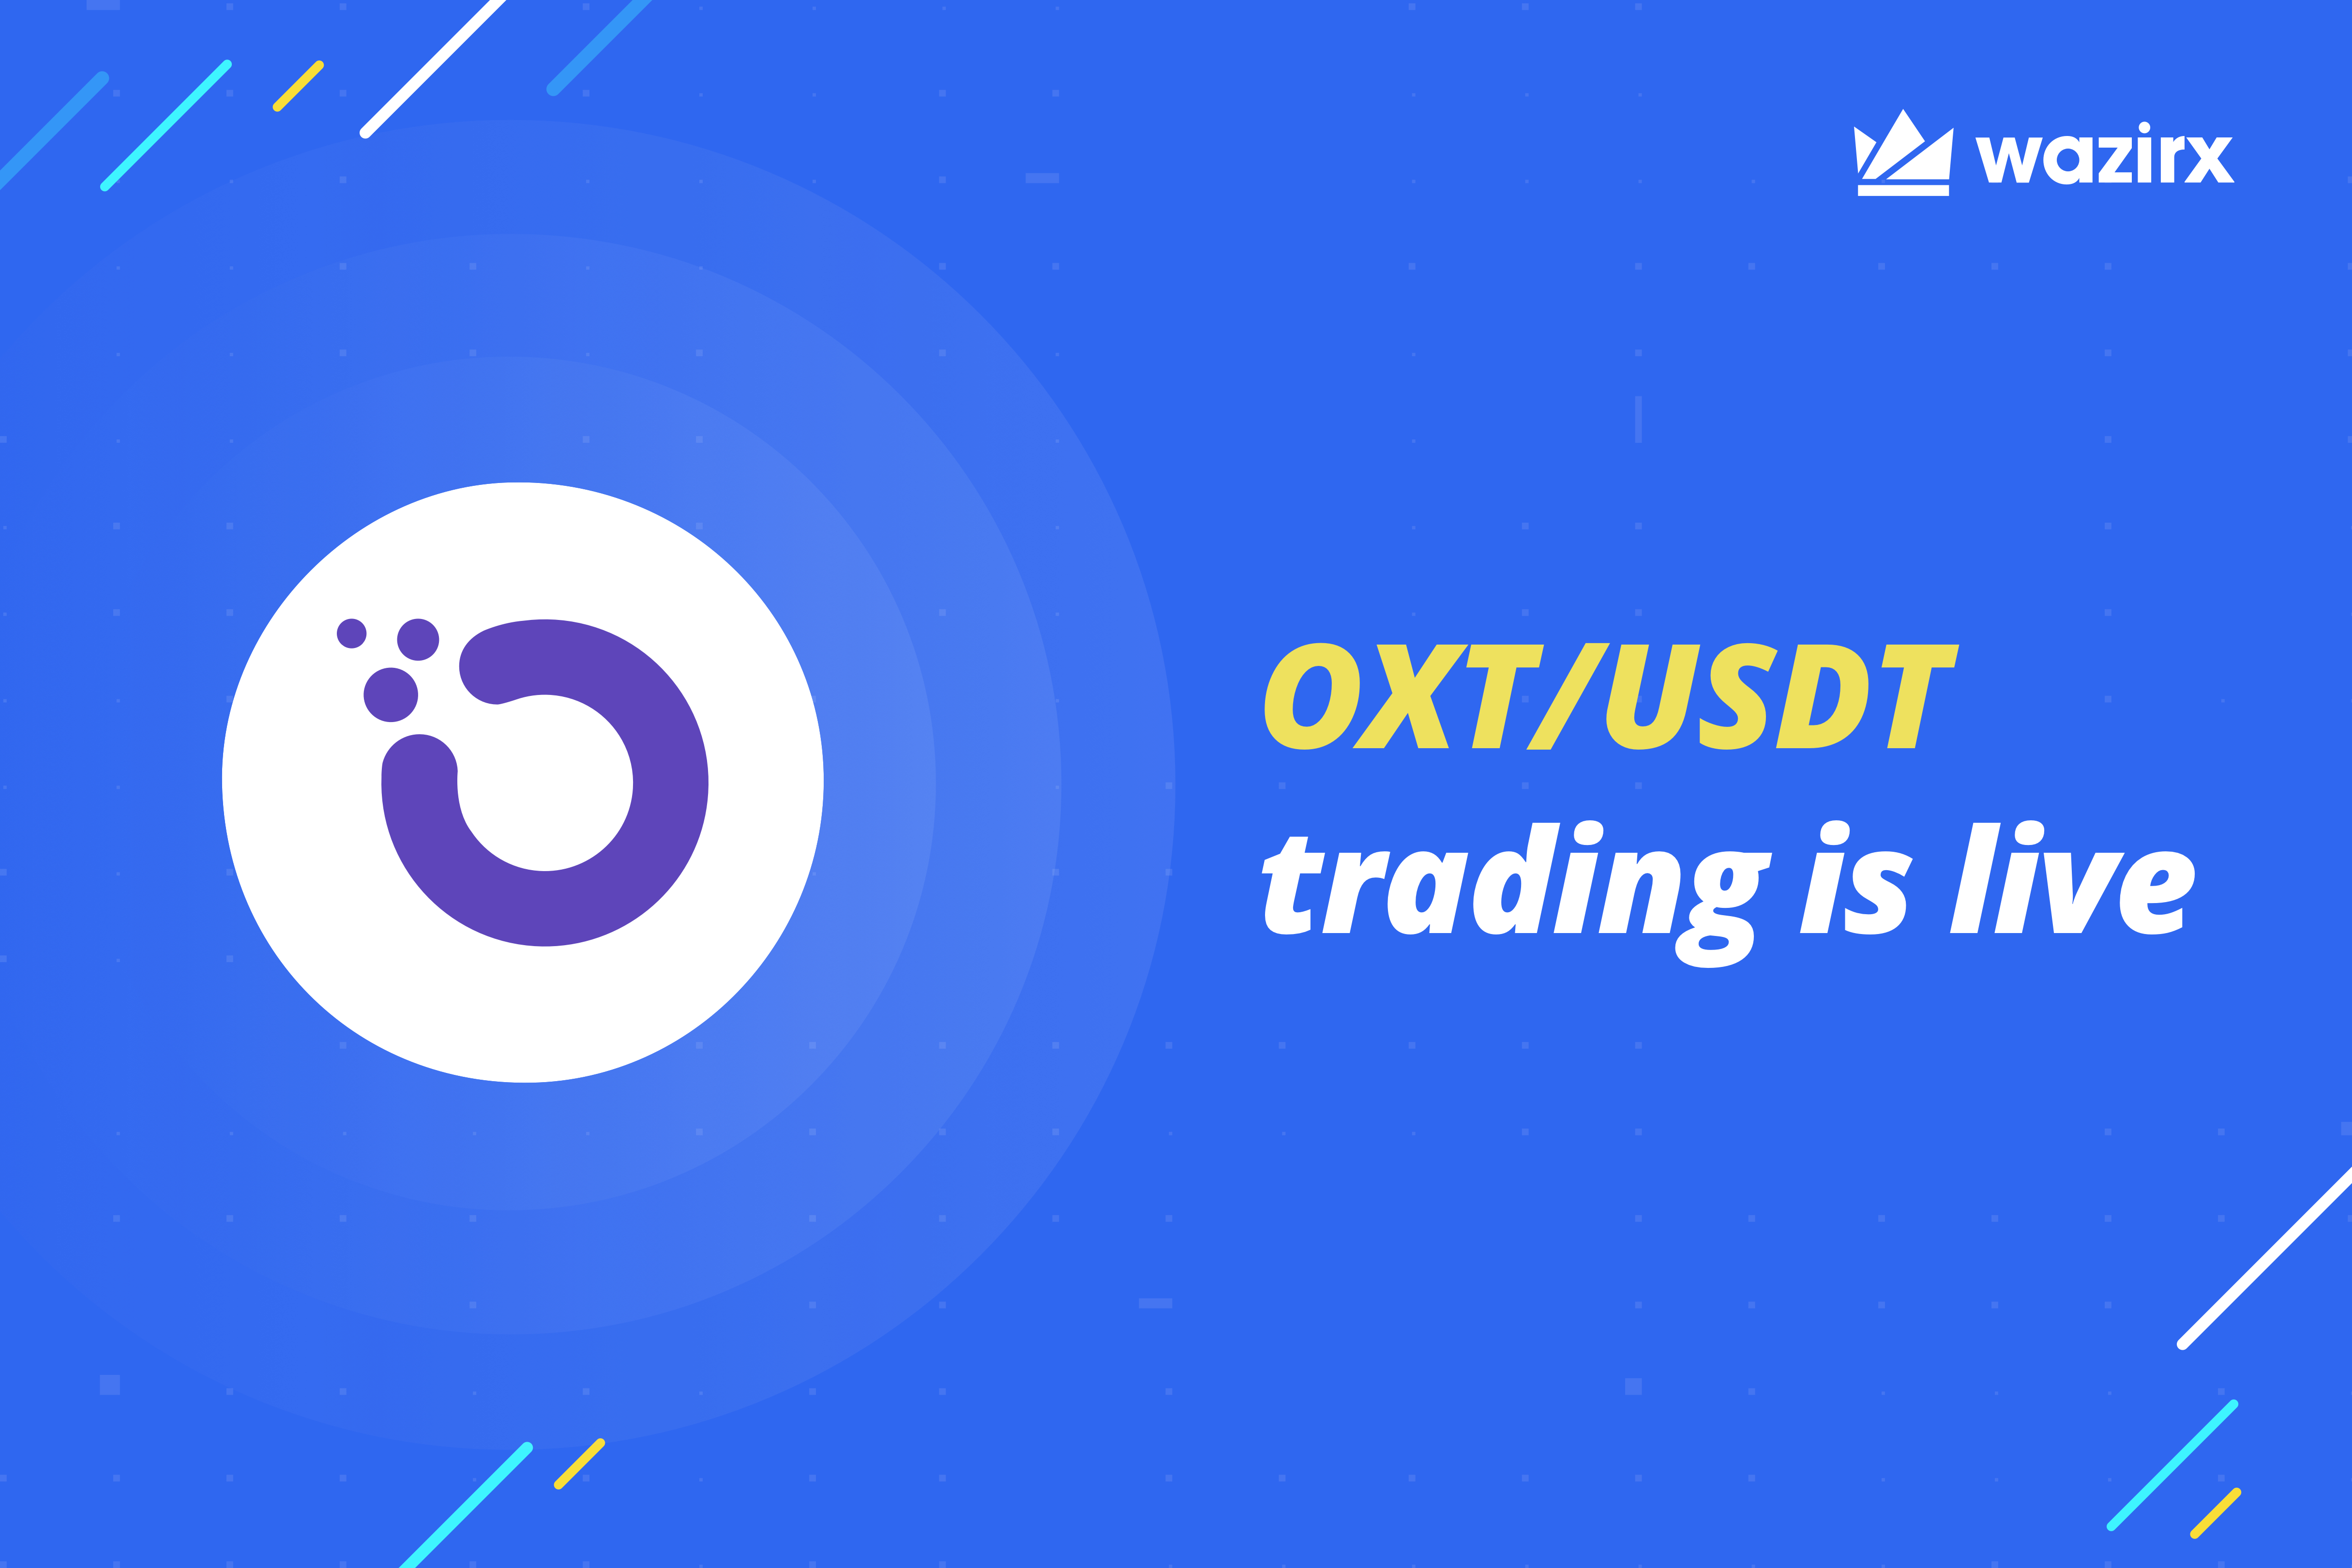 OXT/USDT trading is live on WazirX